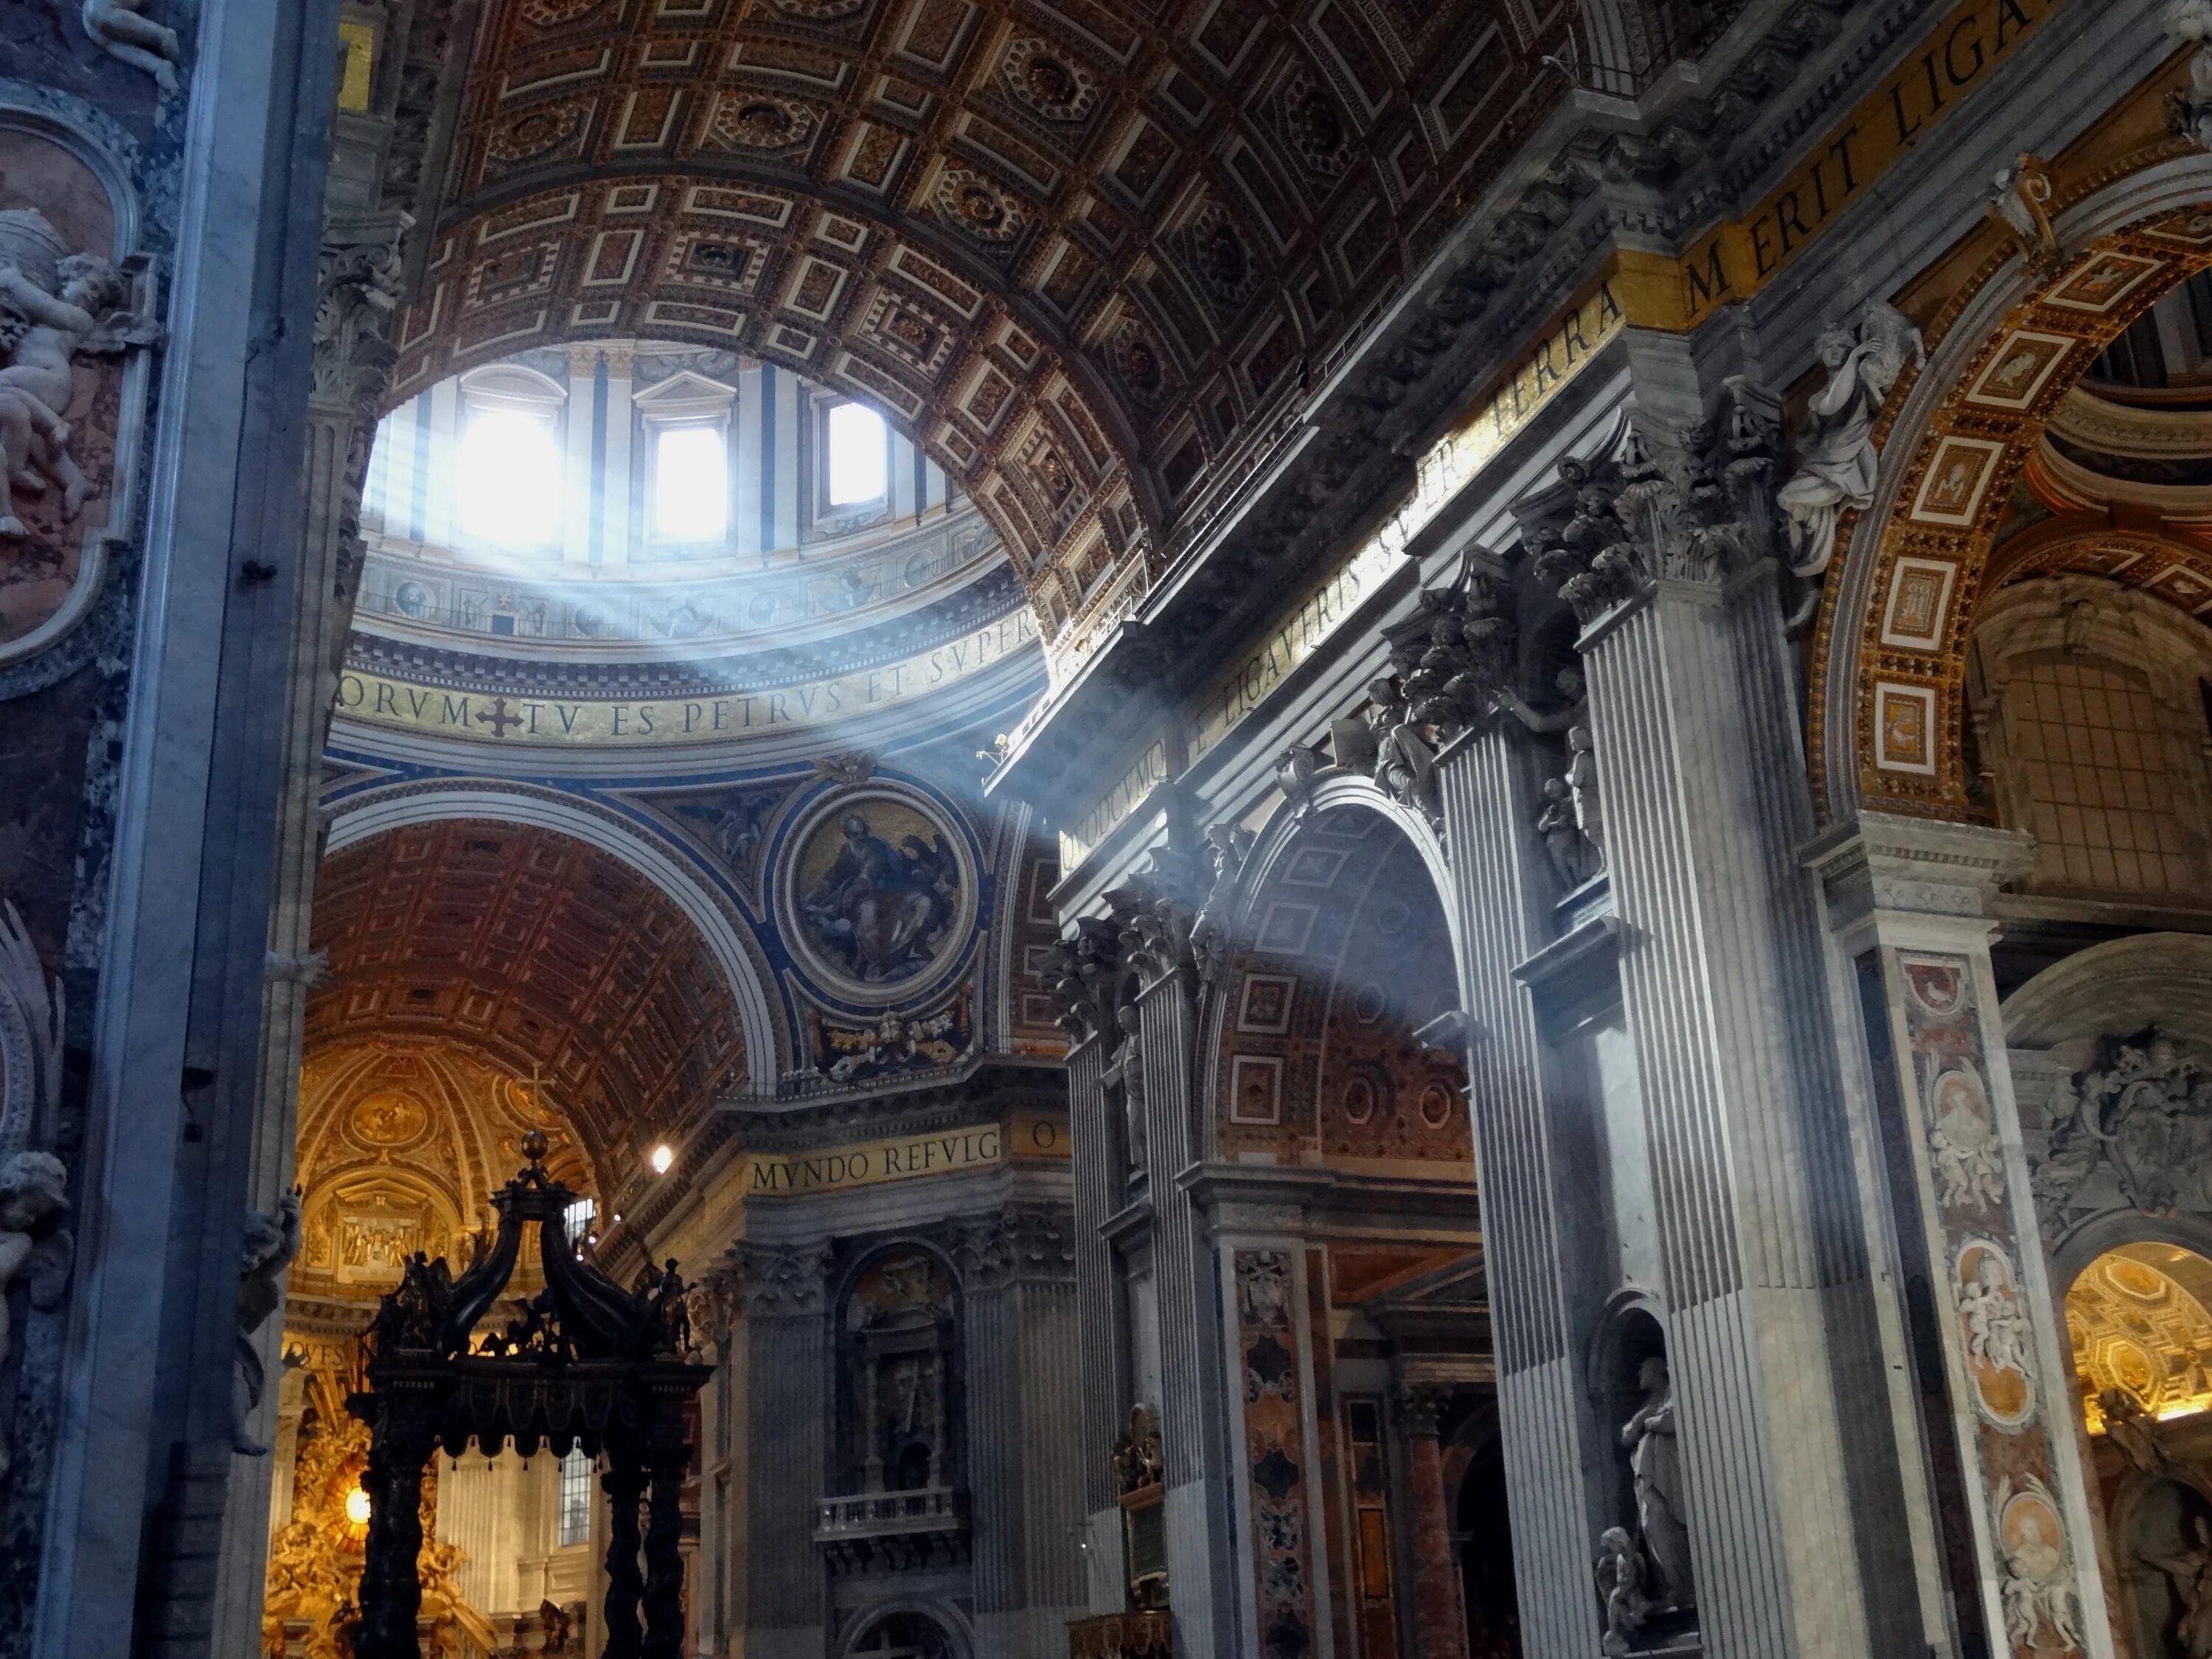 Базилика Сан Пьетро внутри. Фасад базилики Святого Петра в Ватикане внутри.